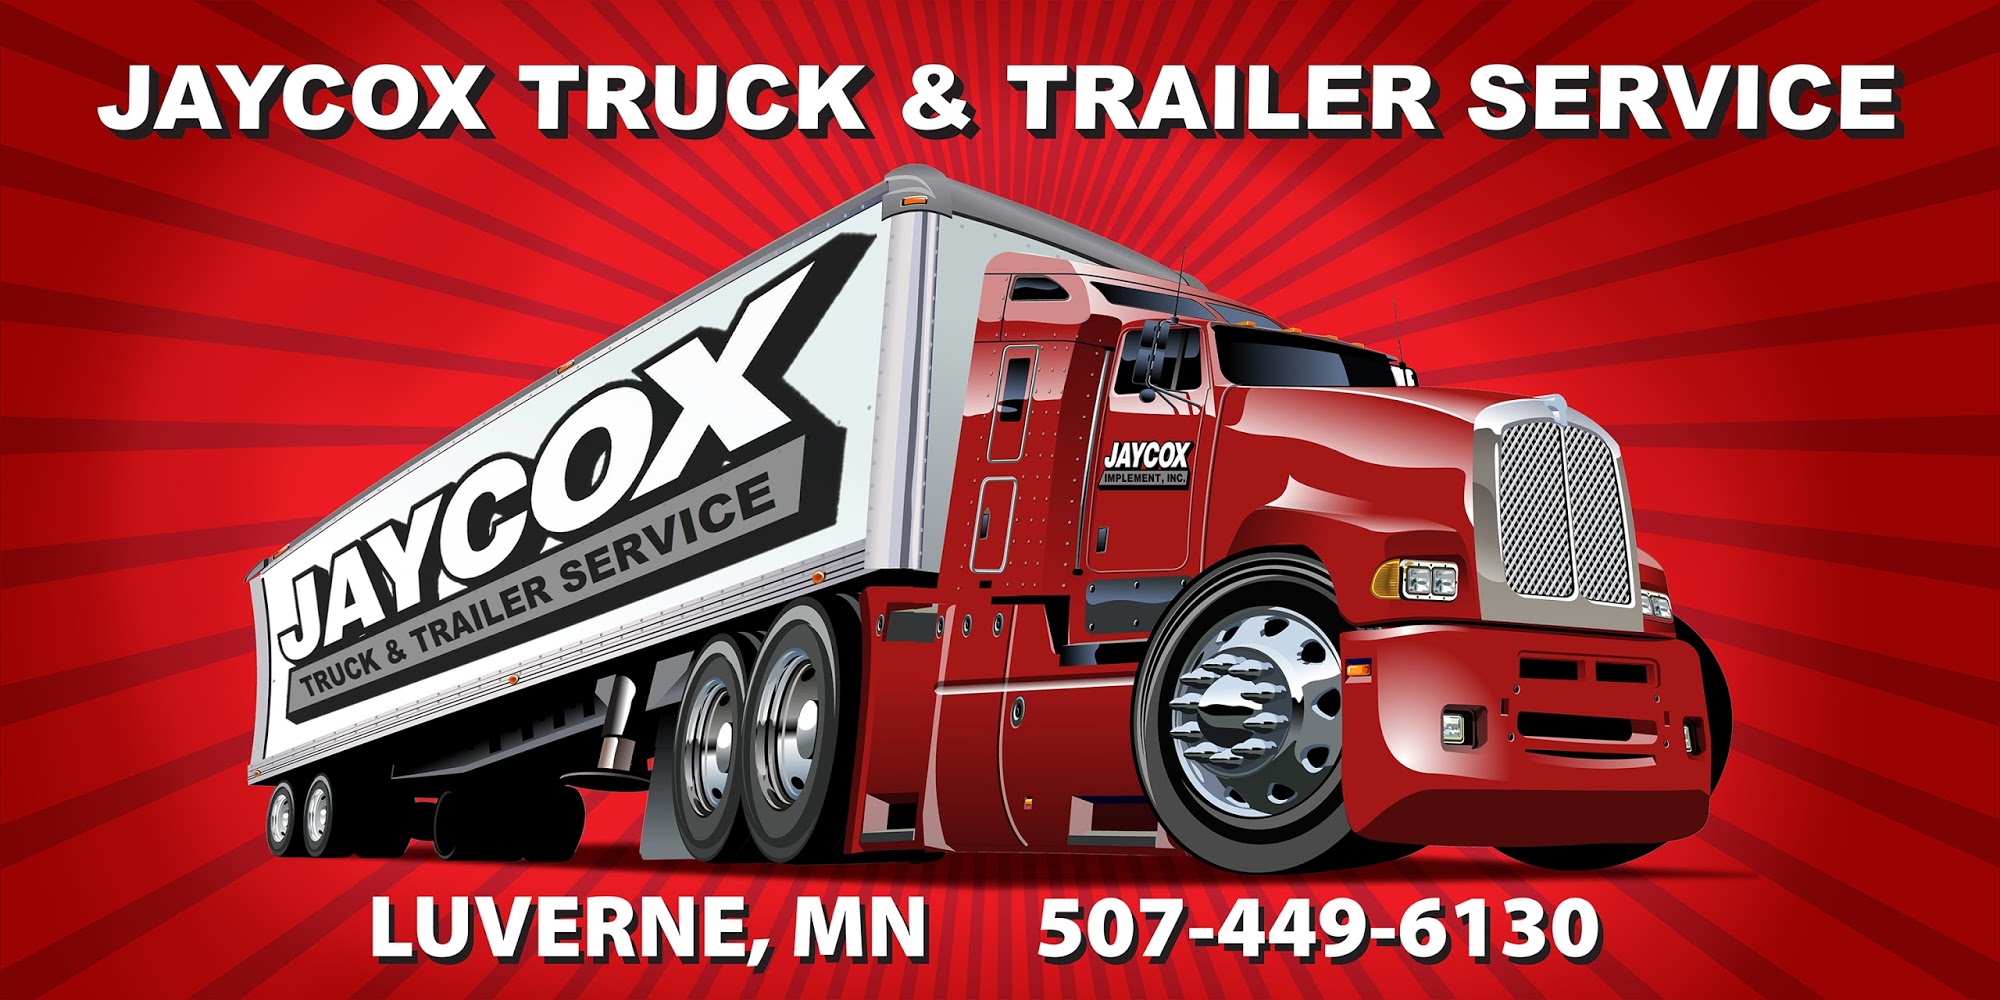 Jaycox Truck & Trailer Service